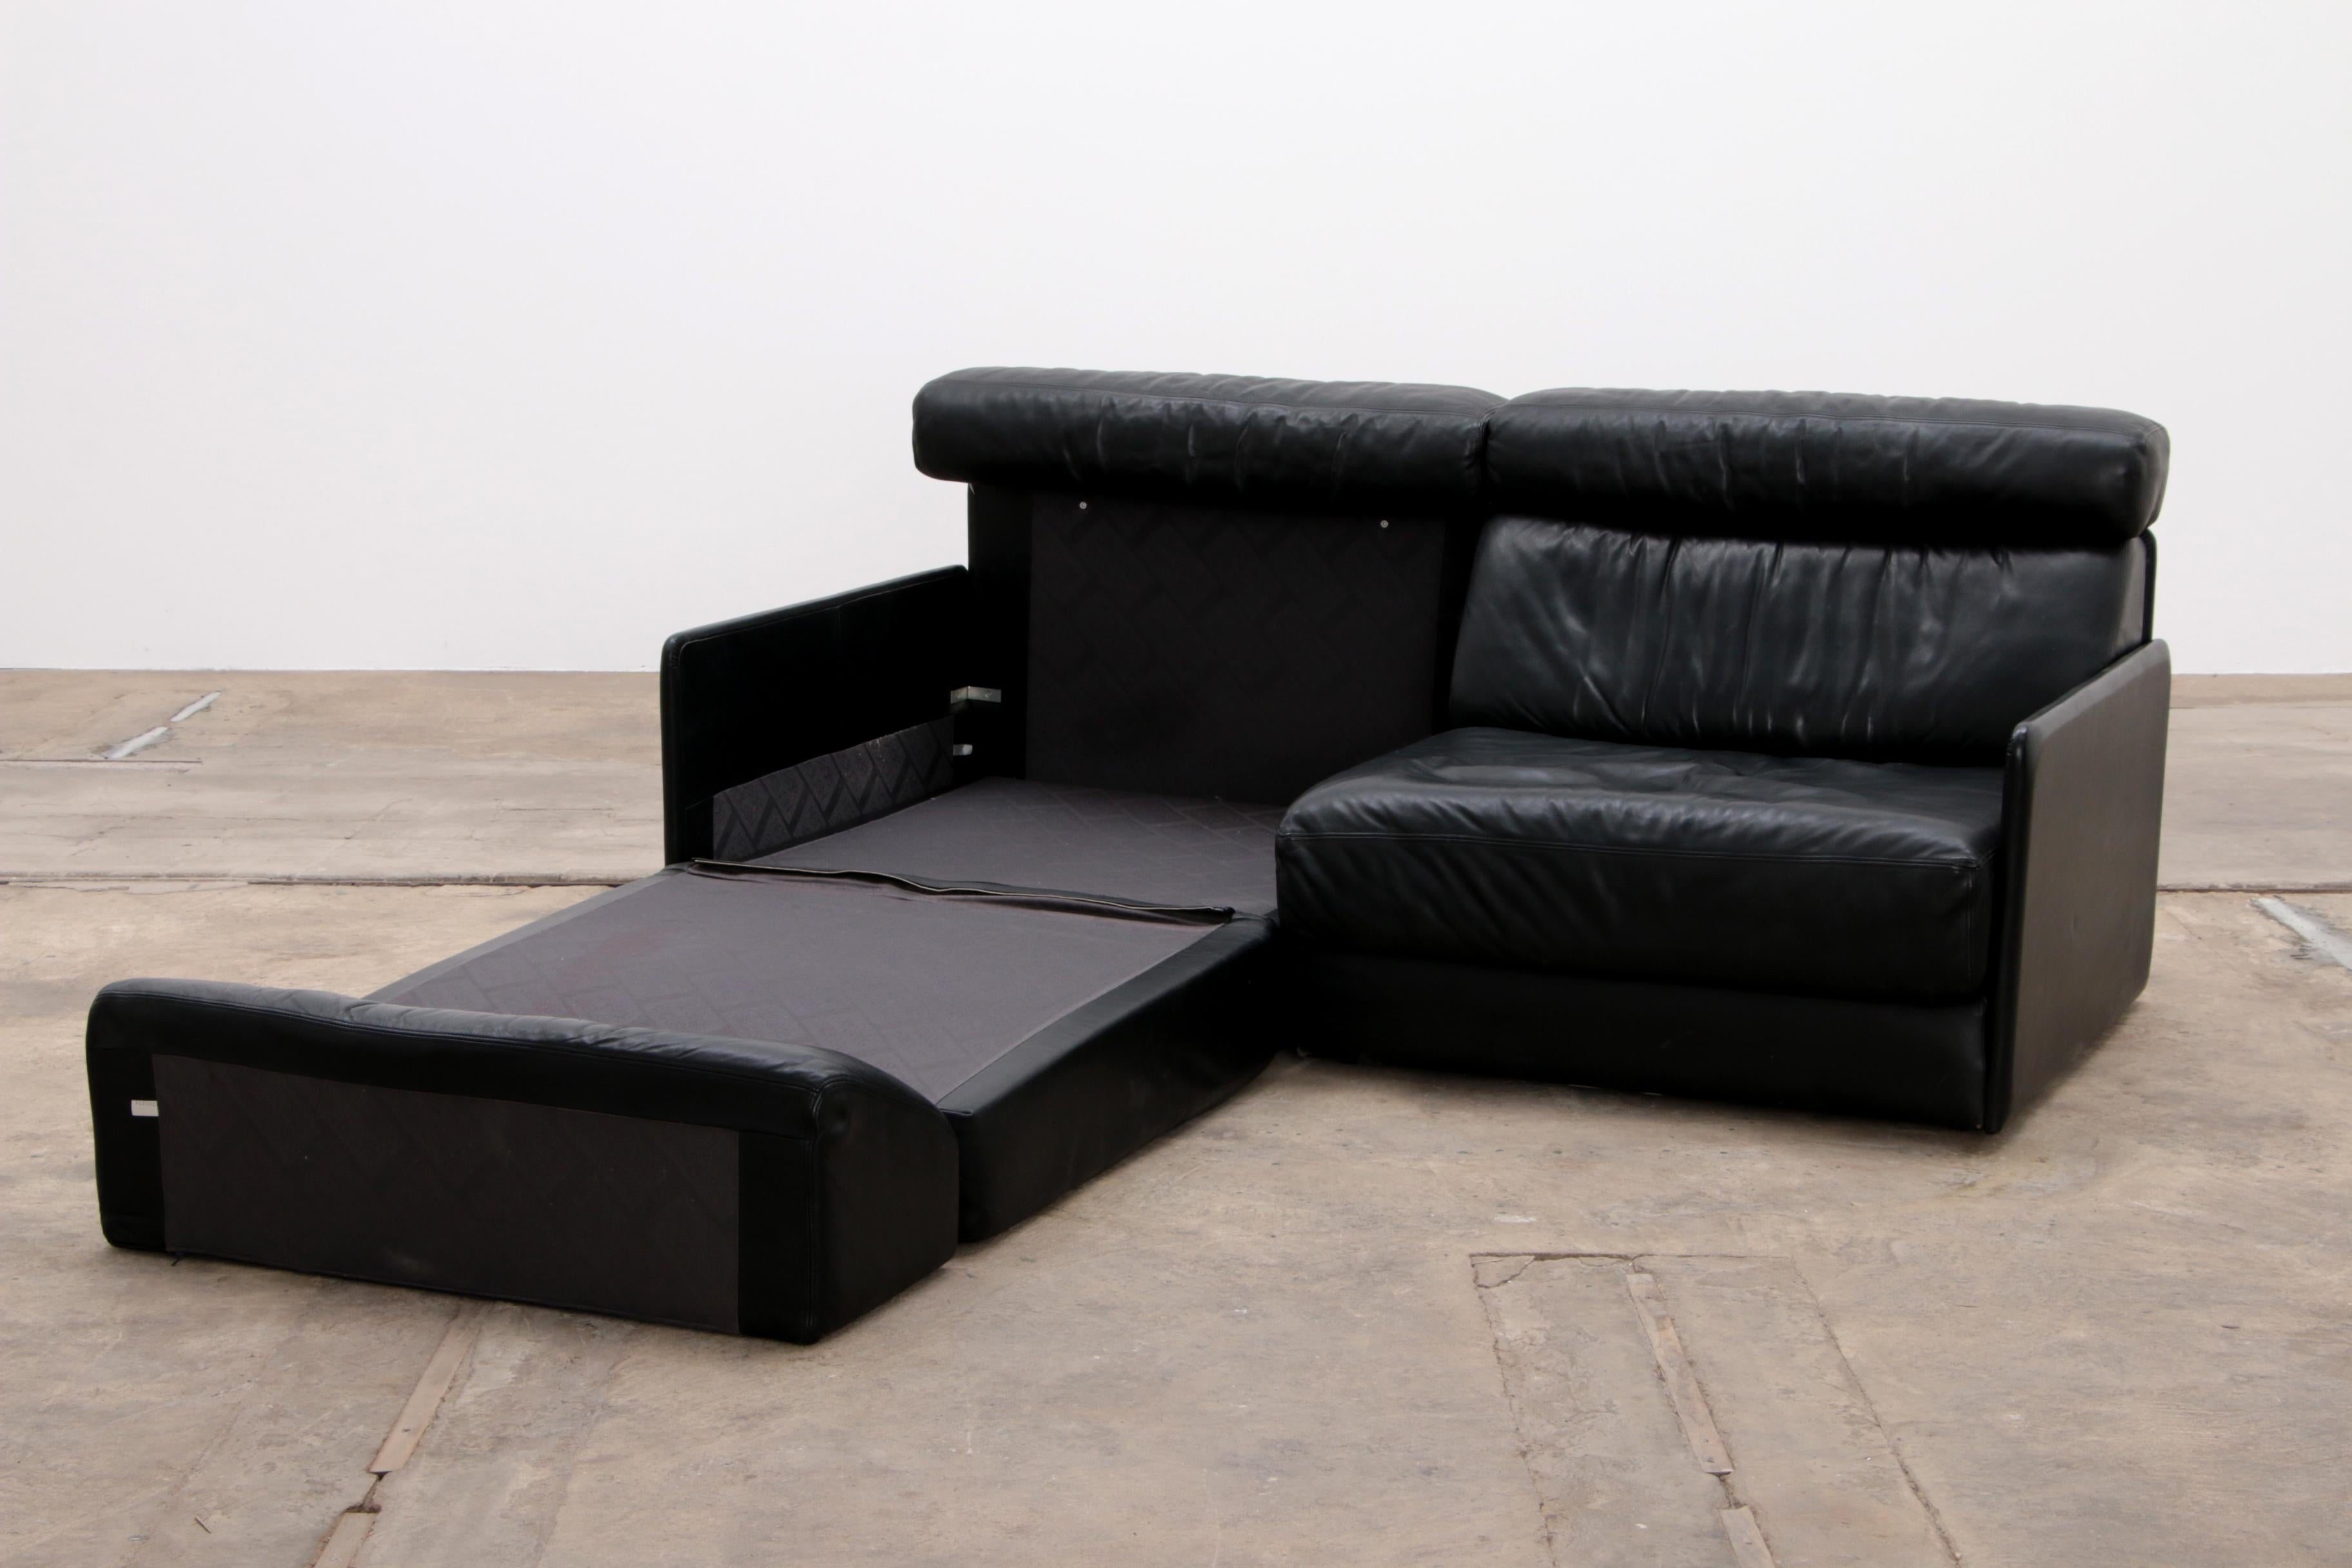 Leather De Sede DS76 Sofa Bed in Black Upholstery by De Sede Design Team